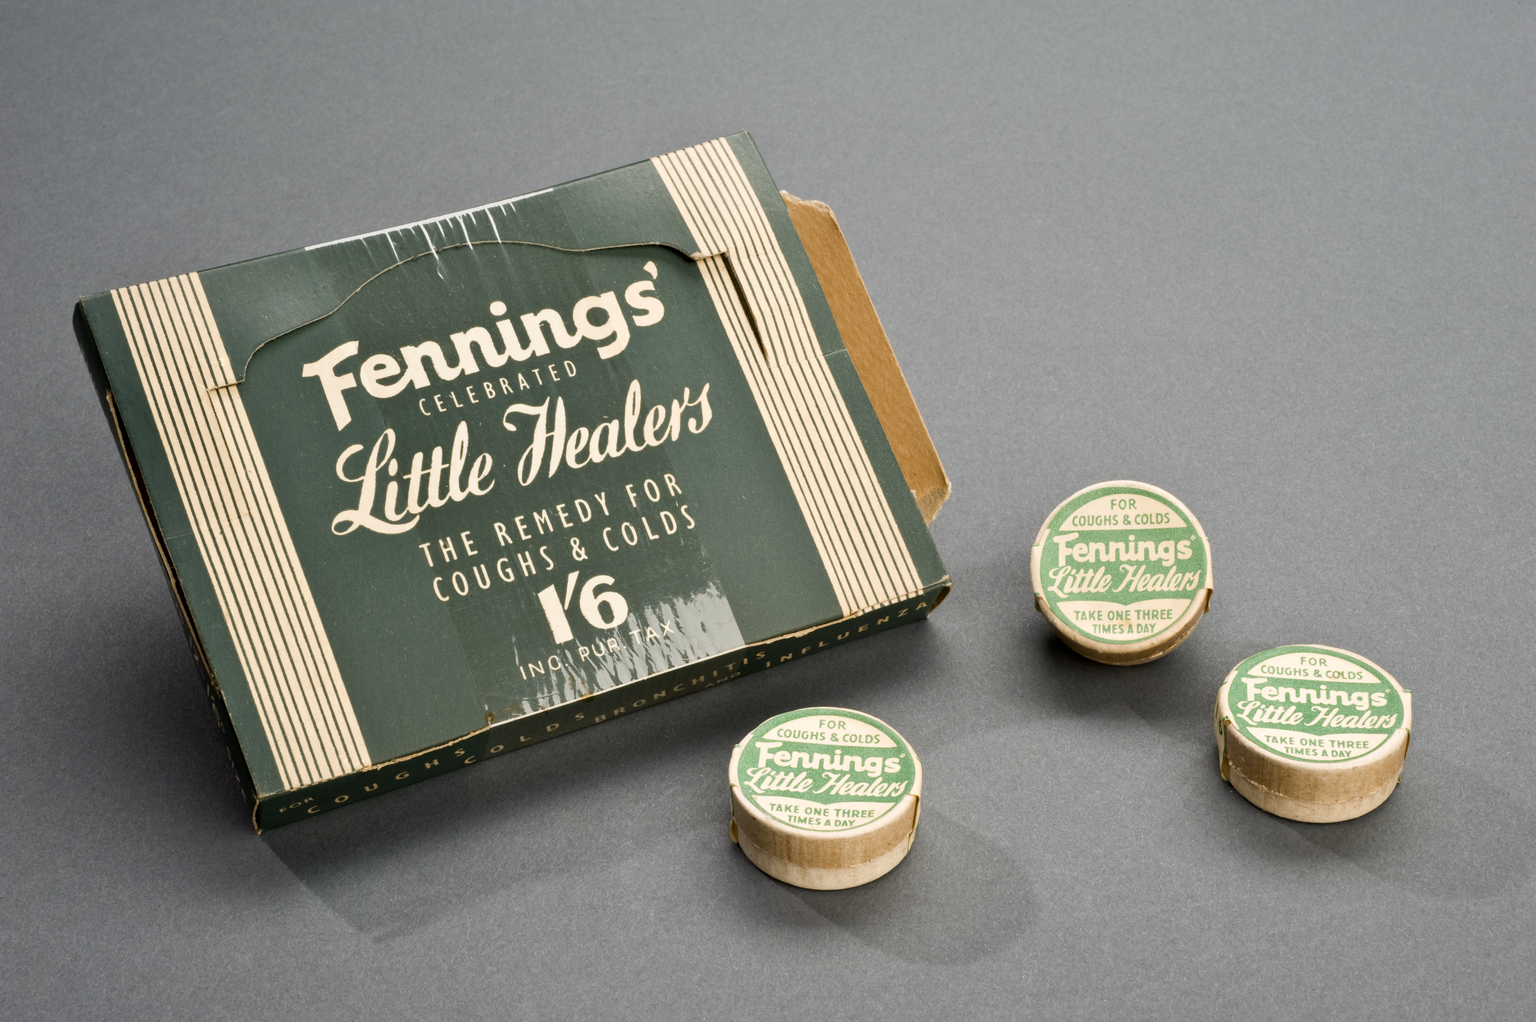 Box of Fennings' Little Healers, England, 1940-1970